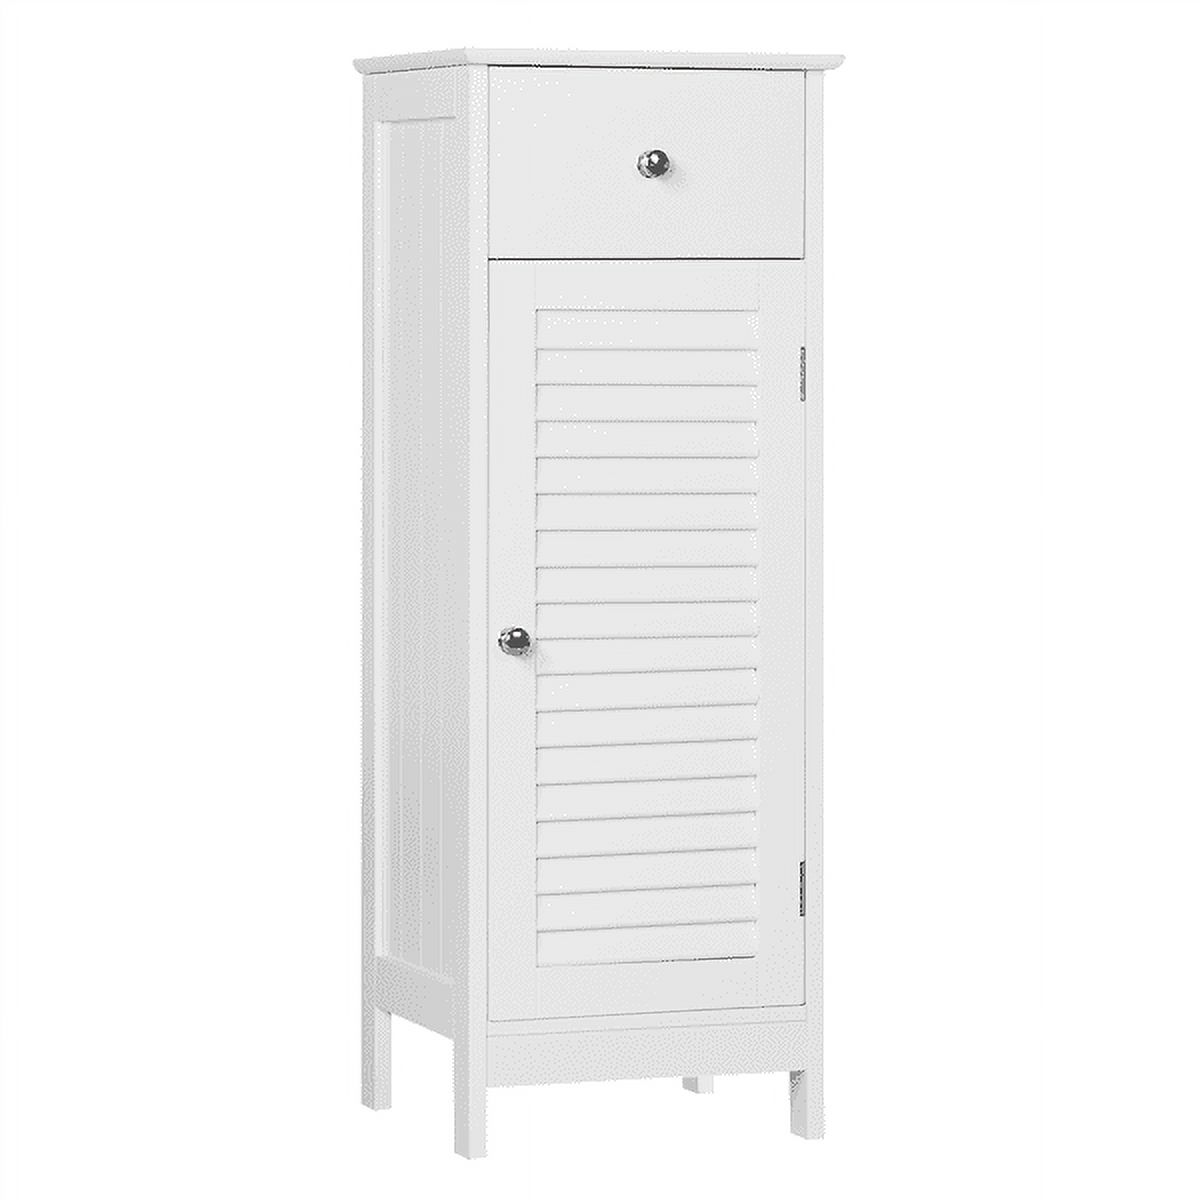 Topeakmart Bathroom Kitchen Floor Storage Cabinet with Drawer and Single Shutter Door White - image 1 of 15